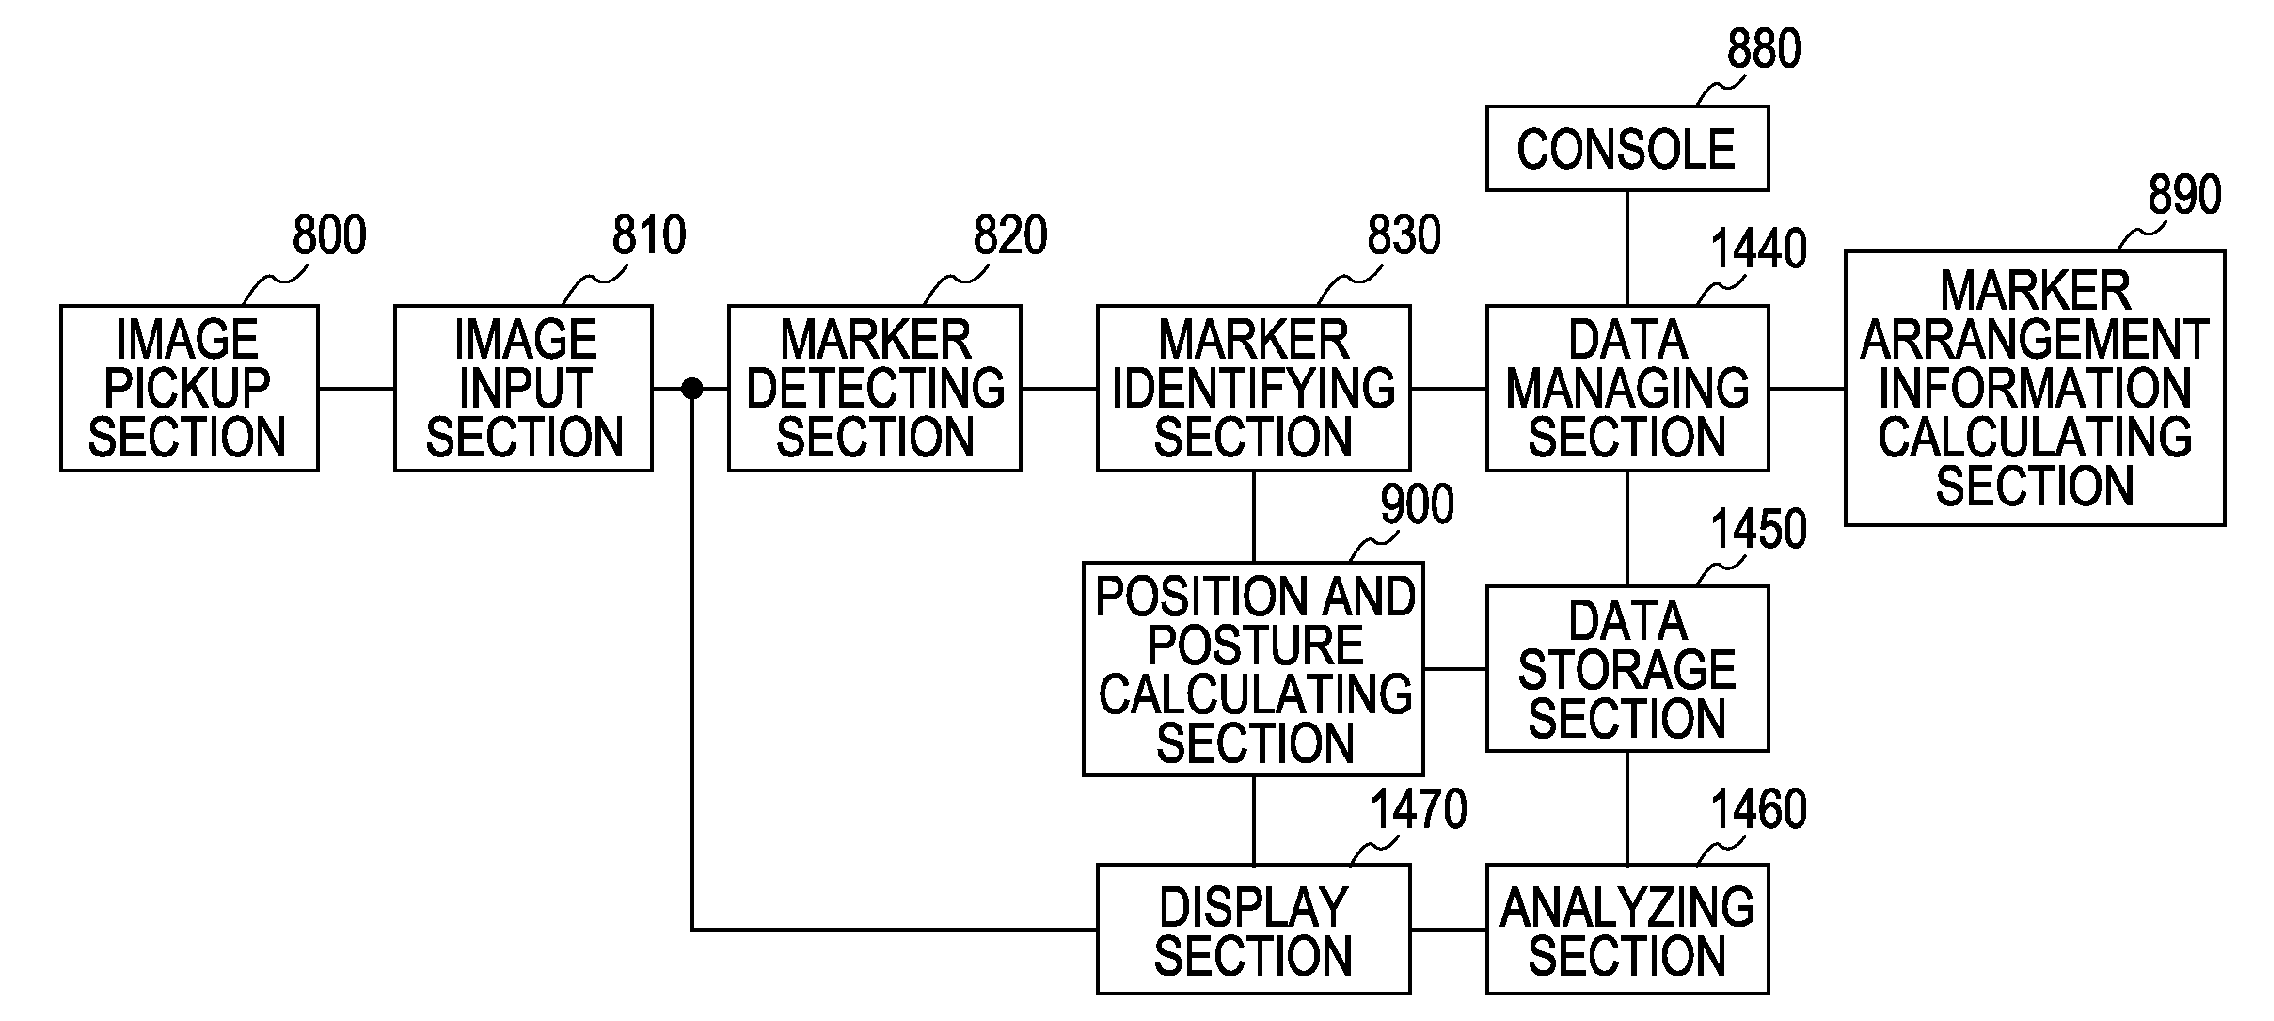 Marker arrangement information measuring apparatus and method